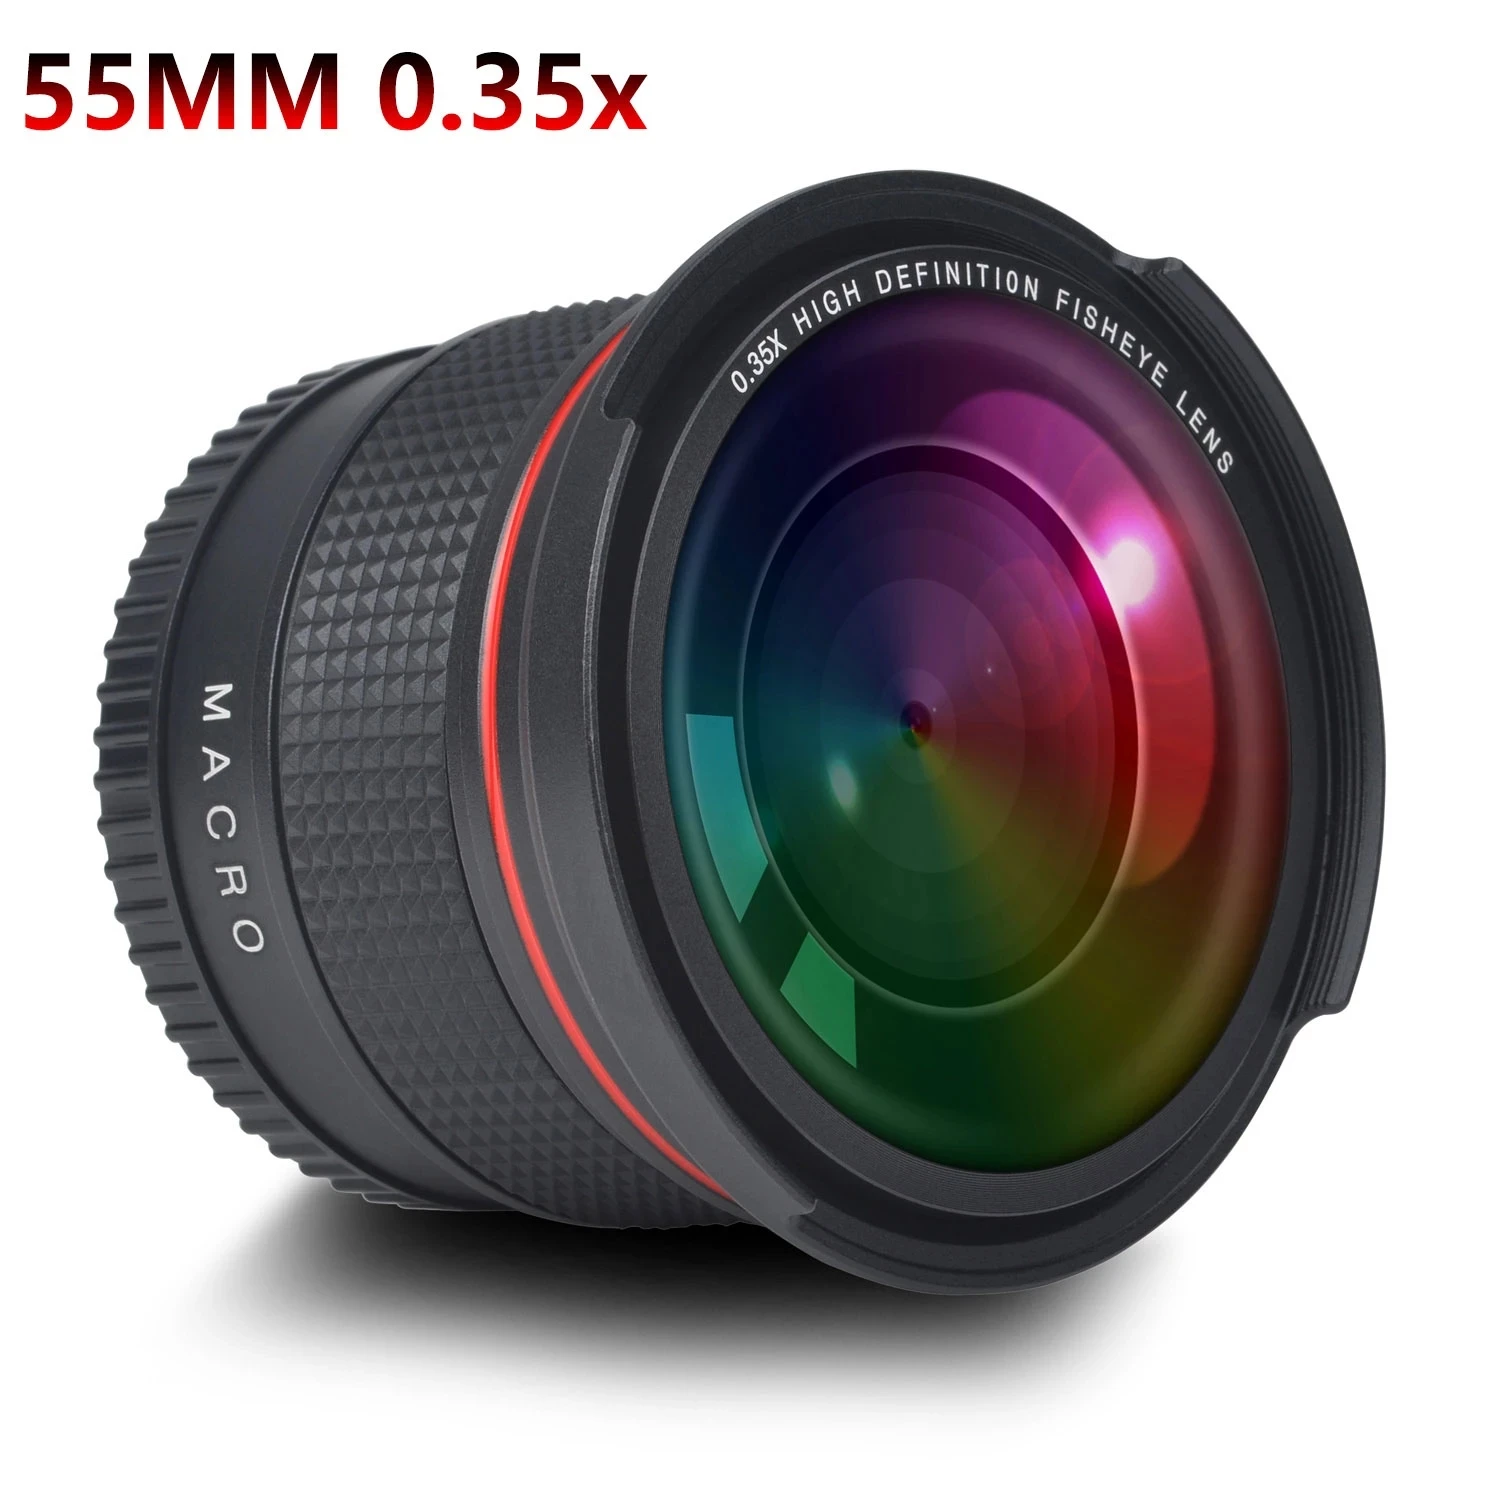 55MM 0.35x Fisheye Wide Angle Lens (W/ Macro Portion) for Nikon D5300 D5200 D5100 D3500 D3400 D3300 D3200 and Sony A99II A77II images - 6